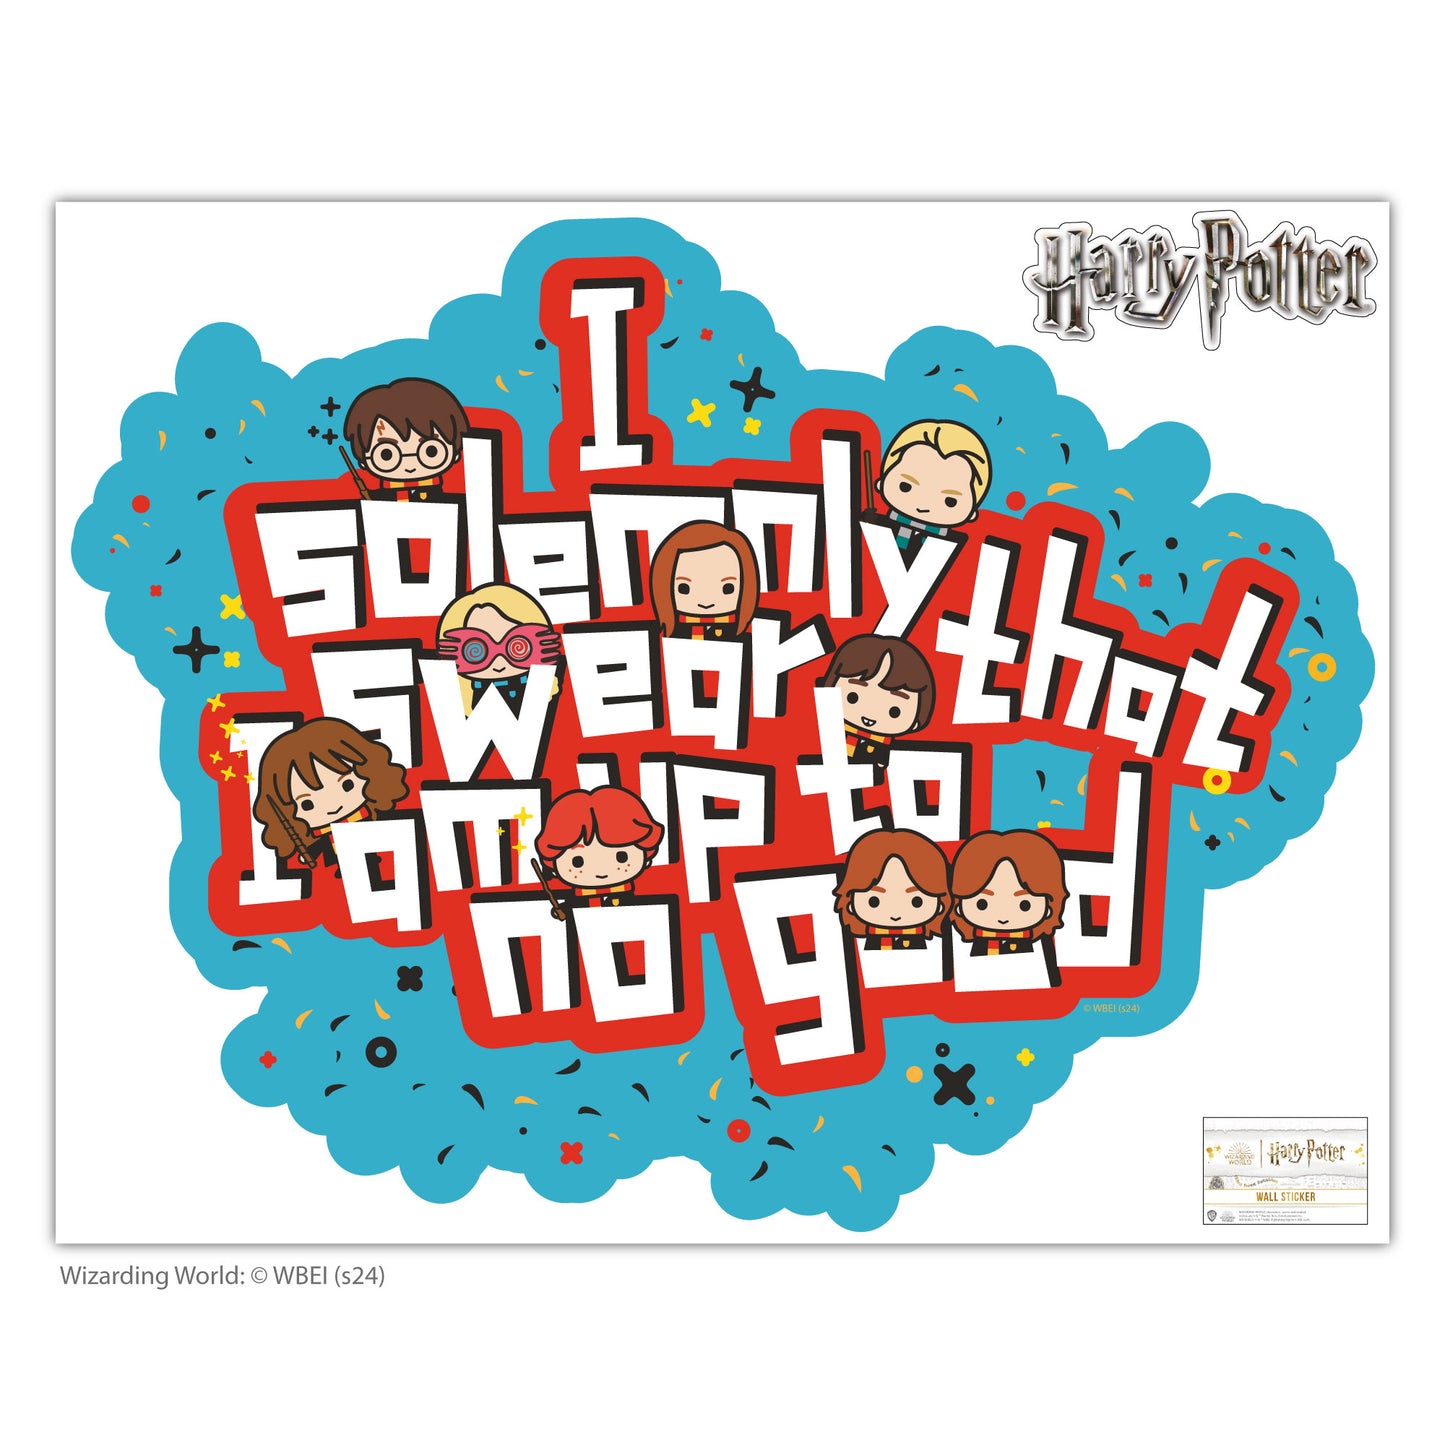 HARRY POTTER Wall Sticker – Solemnly Swear Charm Wall Decal Wizarding World Art